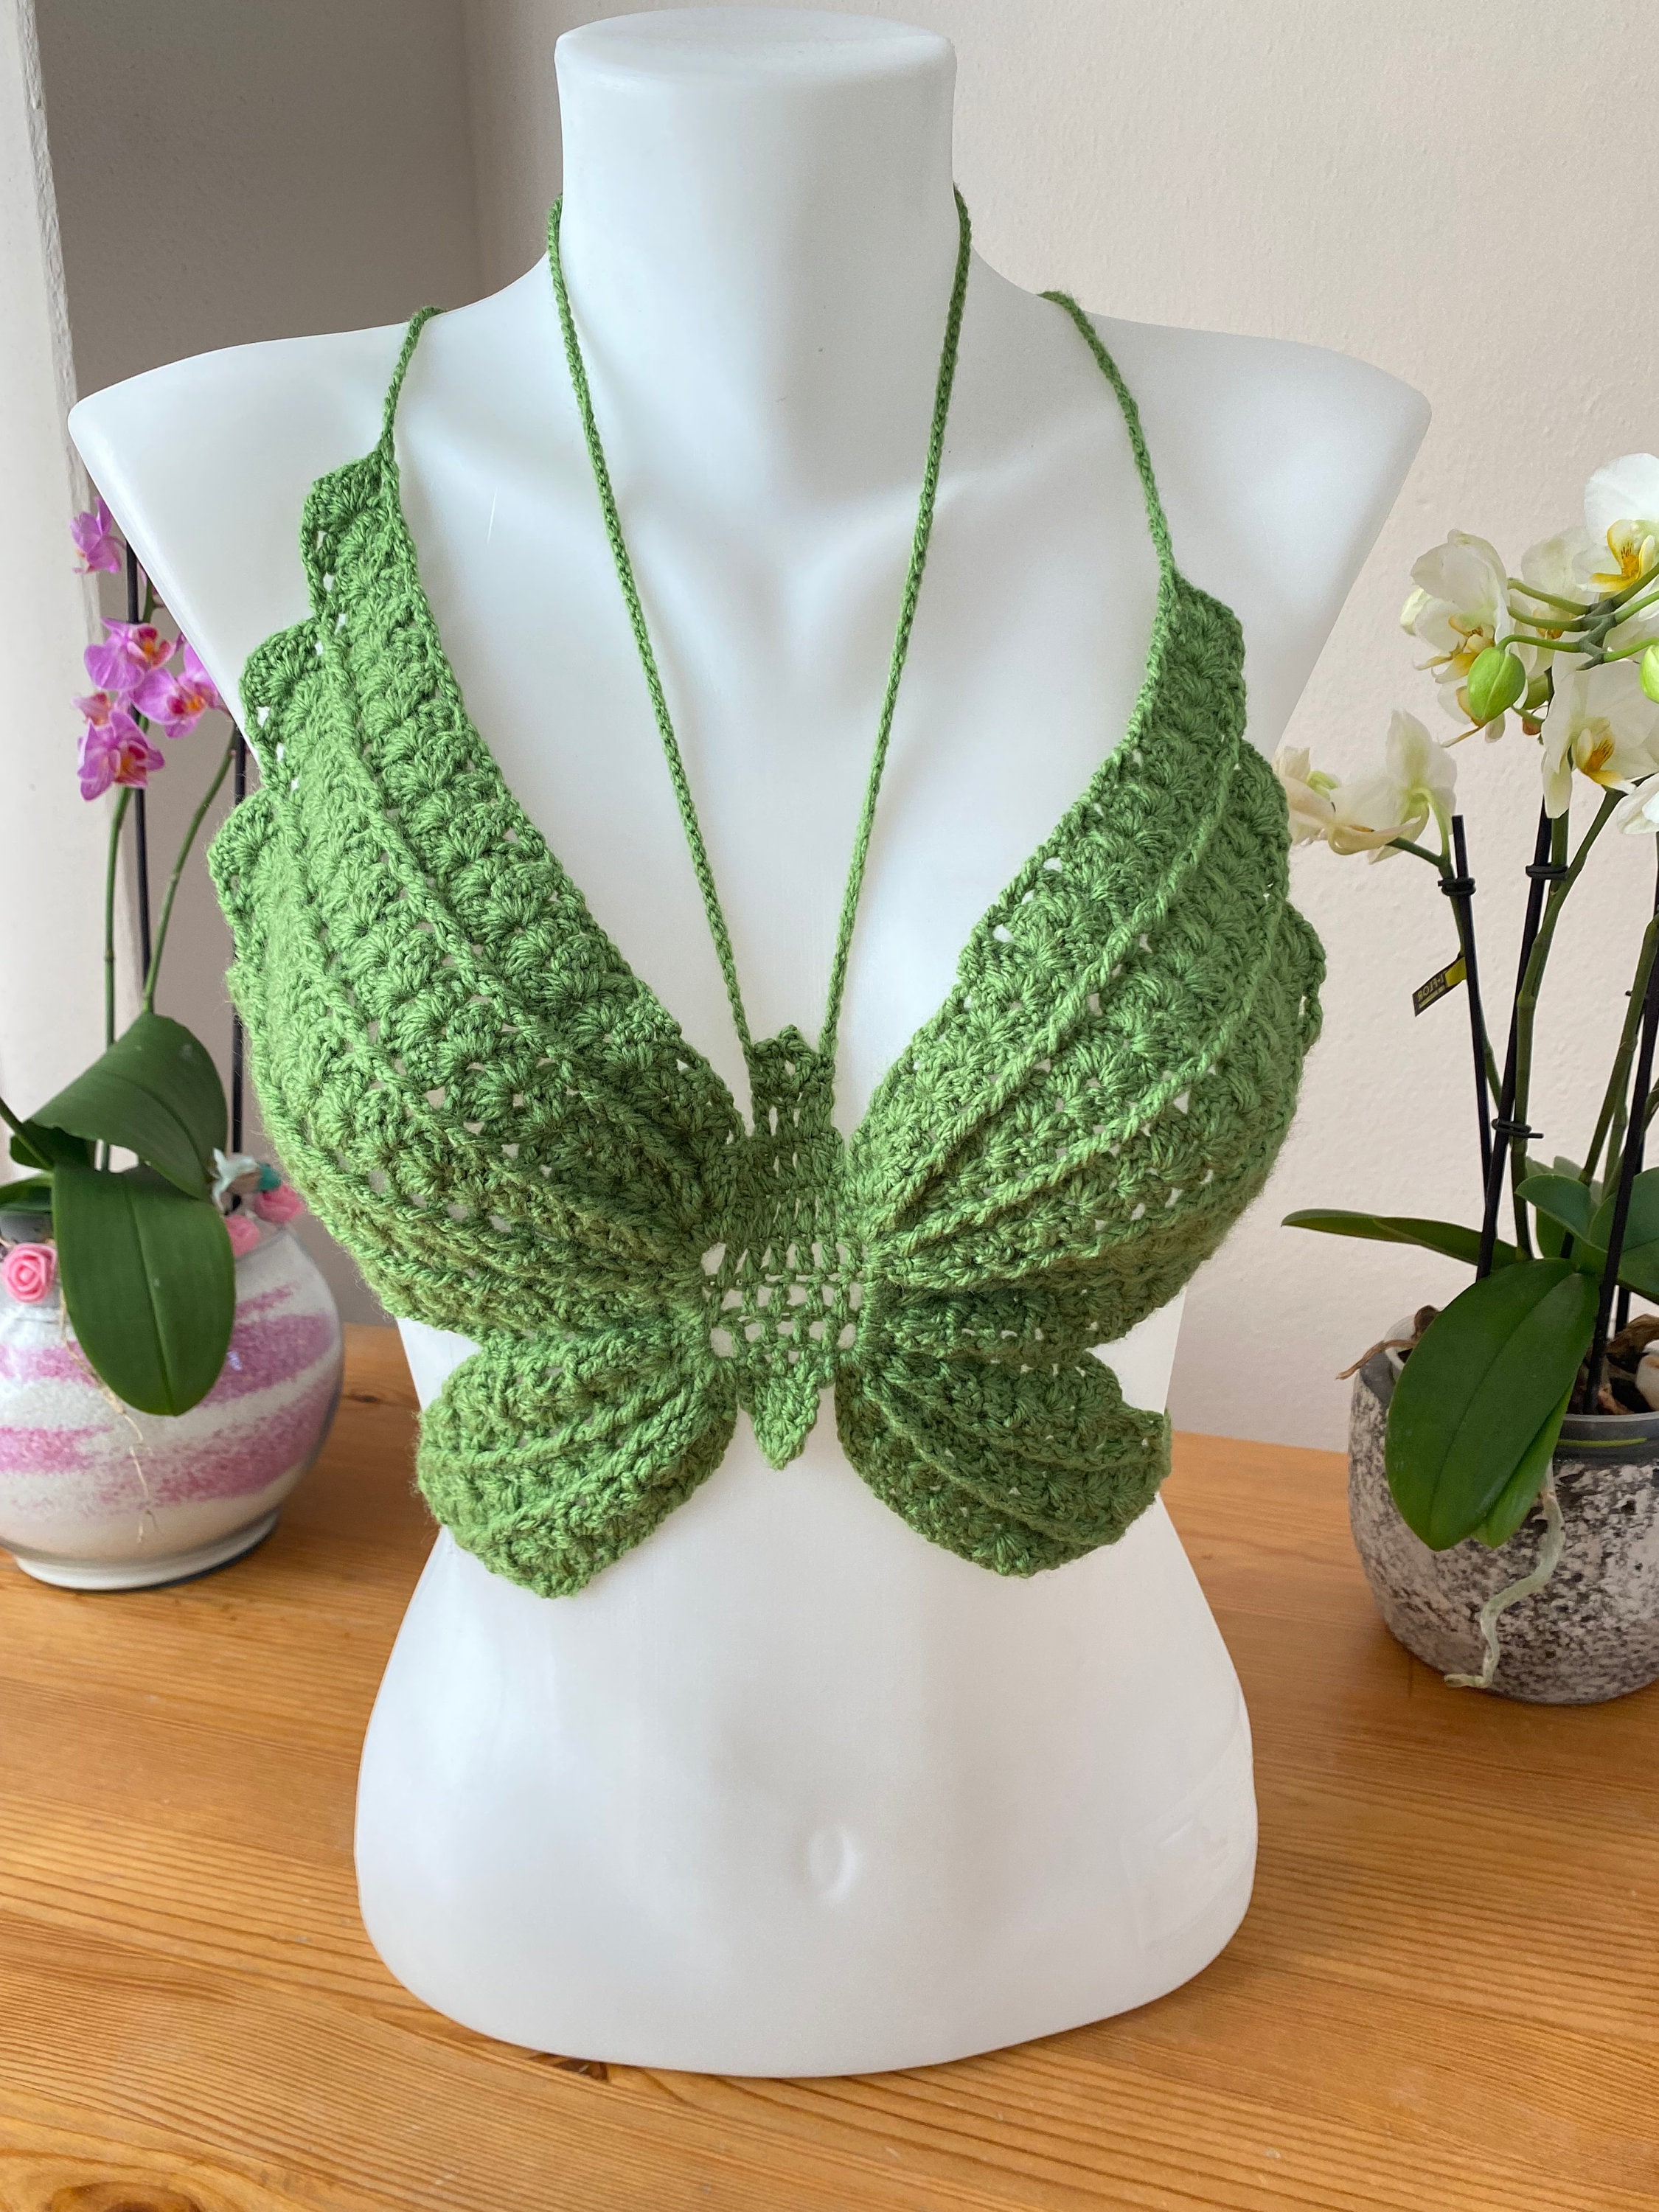 Size Inclusive Crochet Crop Top Pattern, Quick Summer Bralette